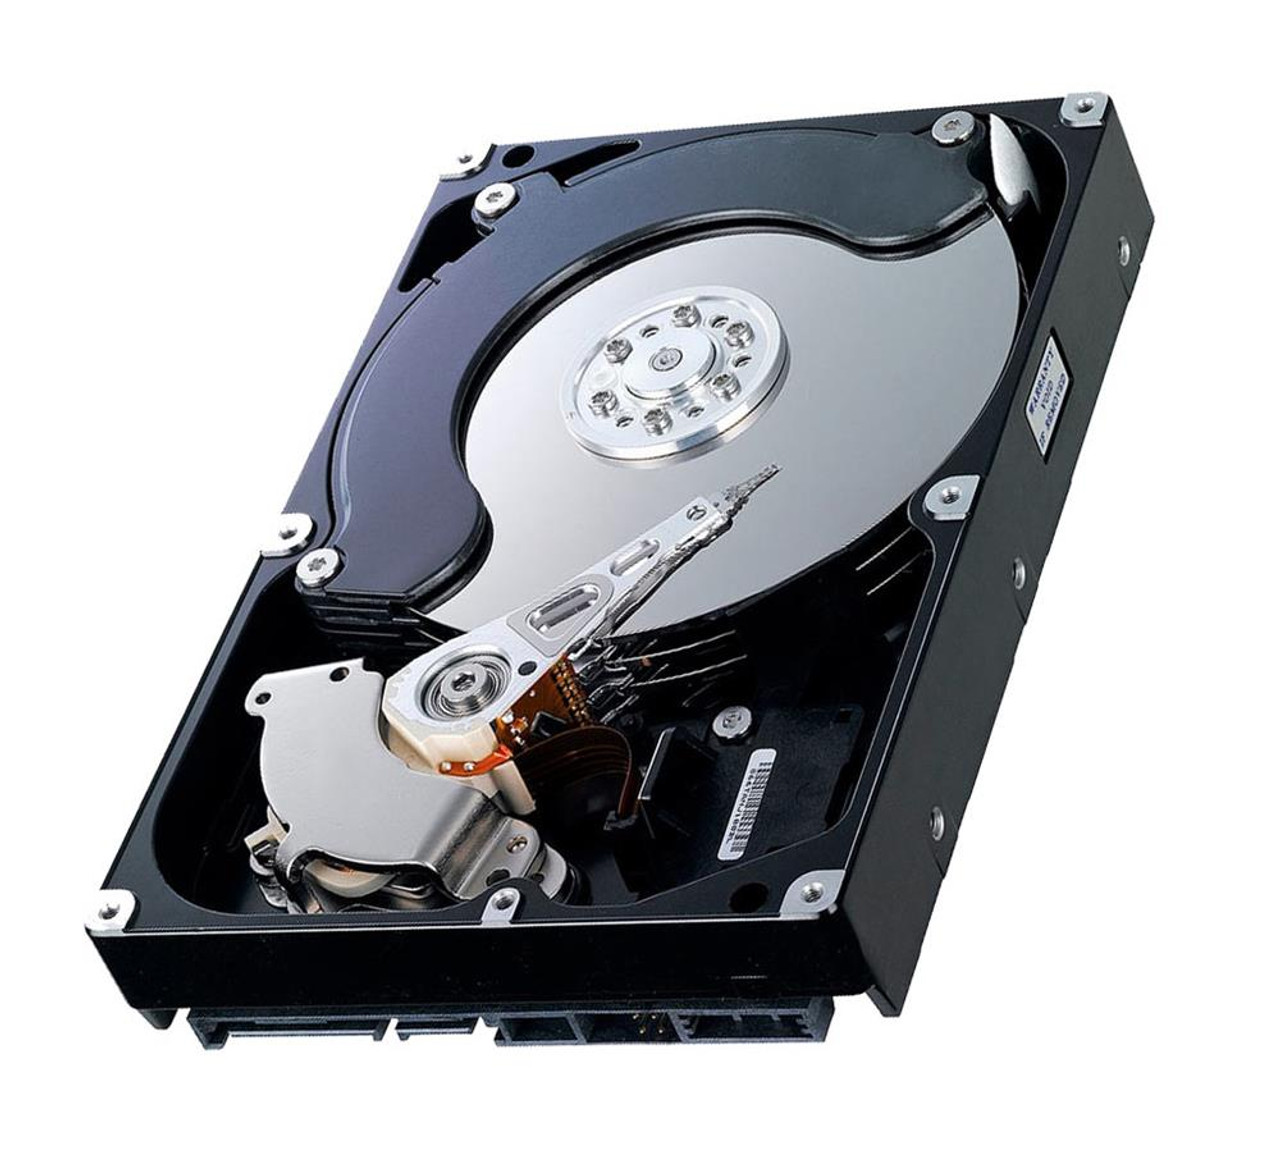 WD200AB - Western Digital Caviar 20GB 5400RPM ATA-100 2MB Cache 3.5-inch Hard Disk Drive